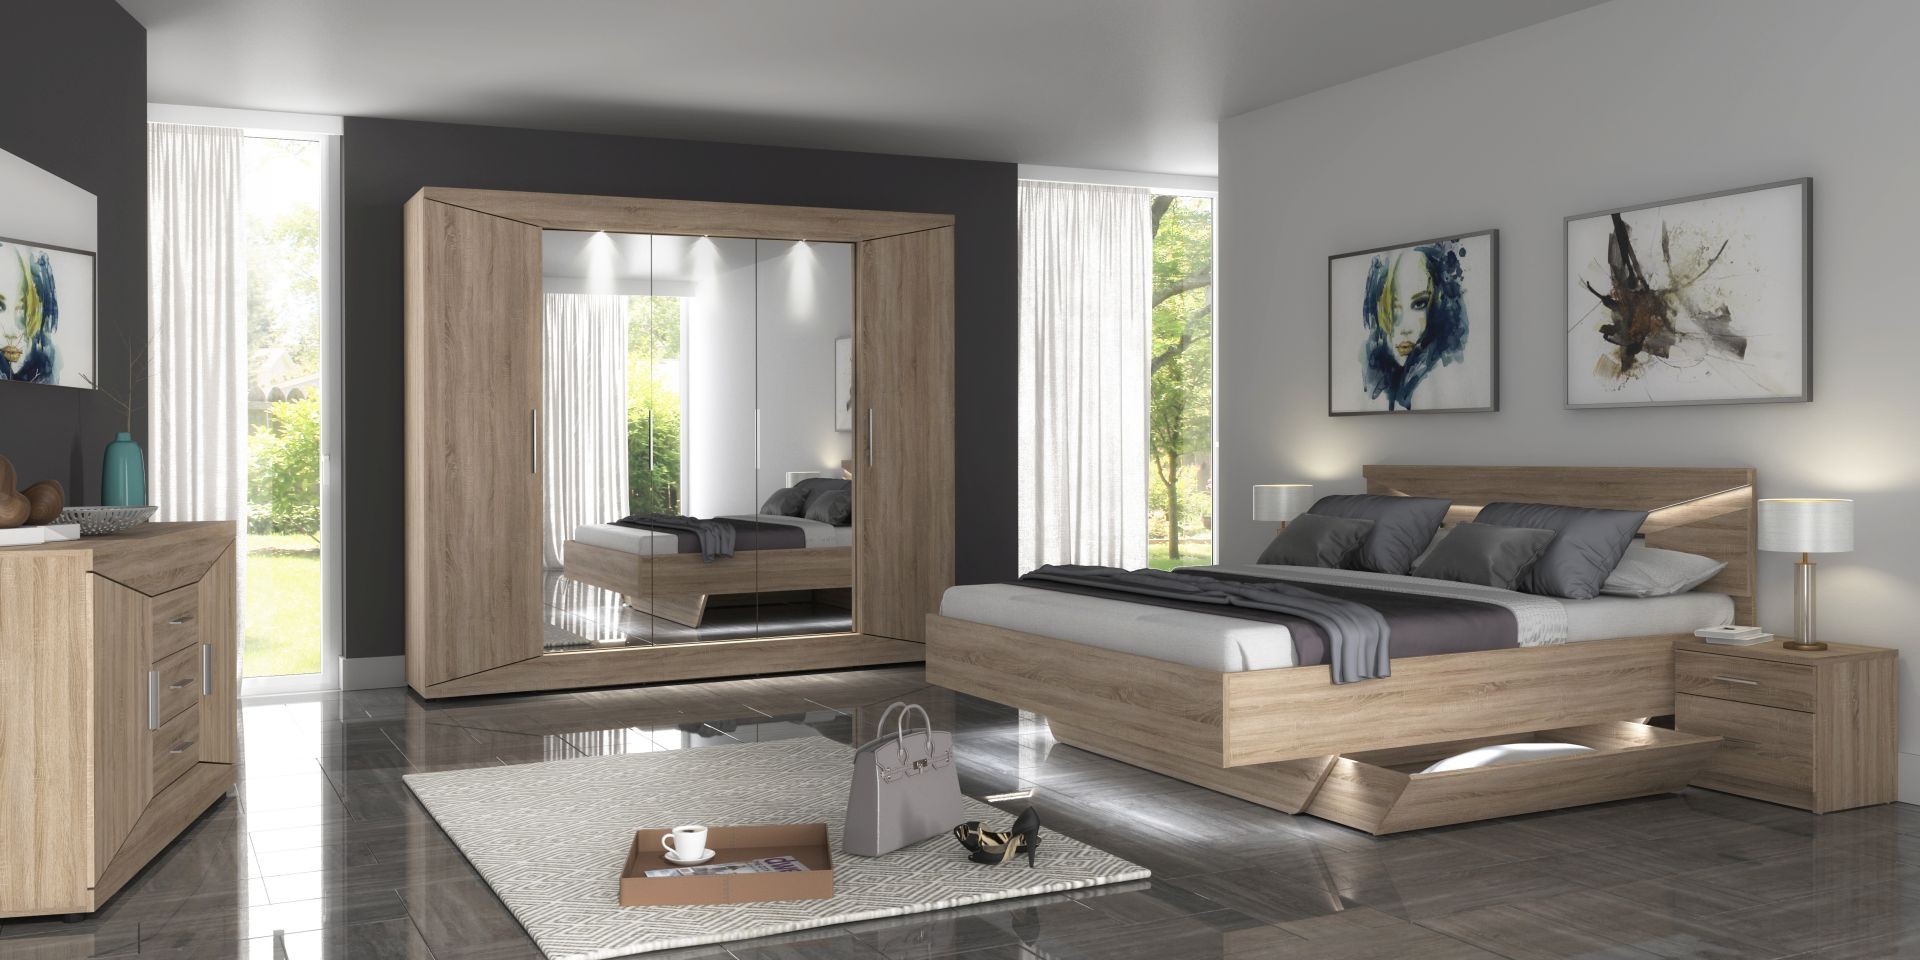 Krásná ložnice inspirace - model DREAM II.